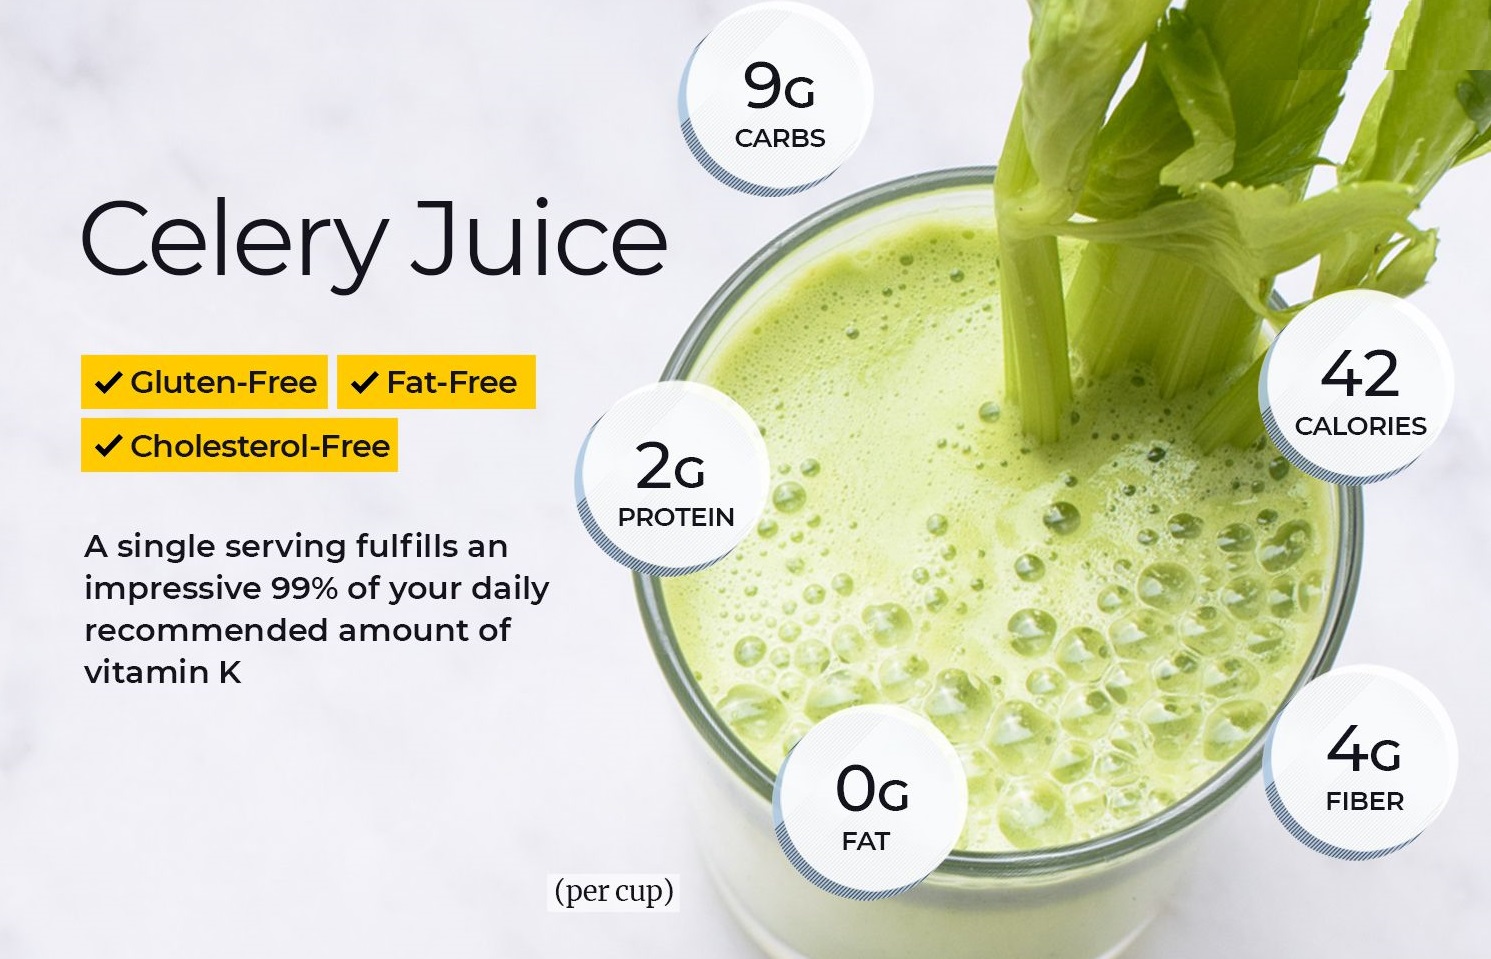 Celery Juice Benefits and Calories consumption